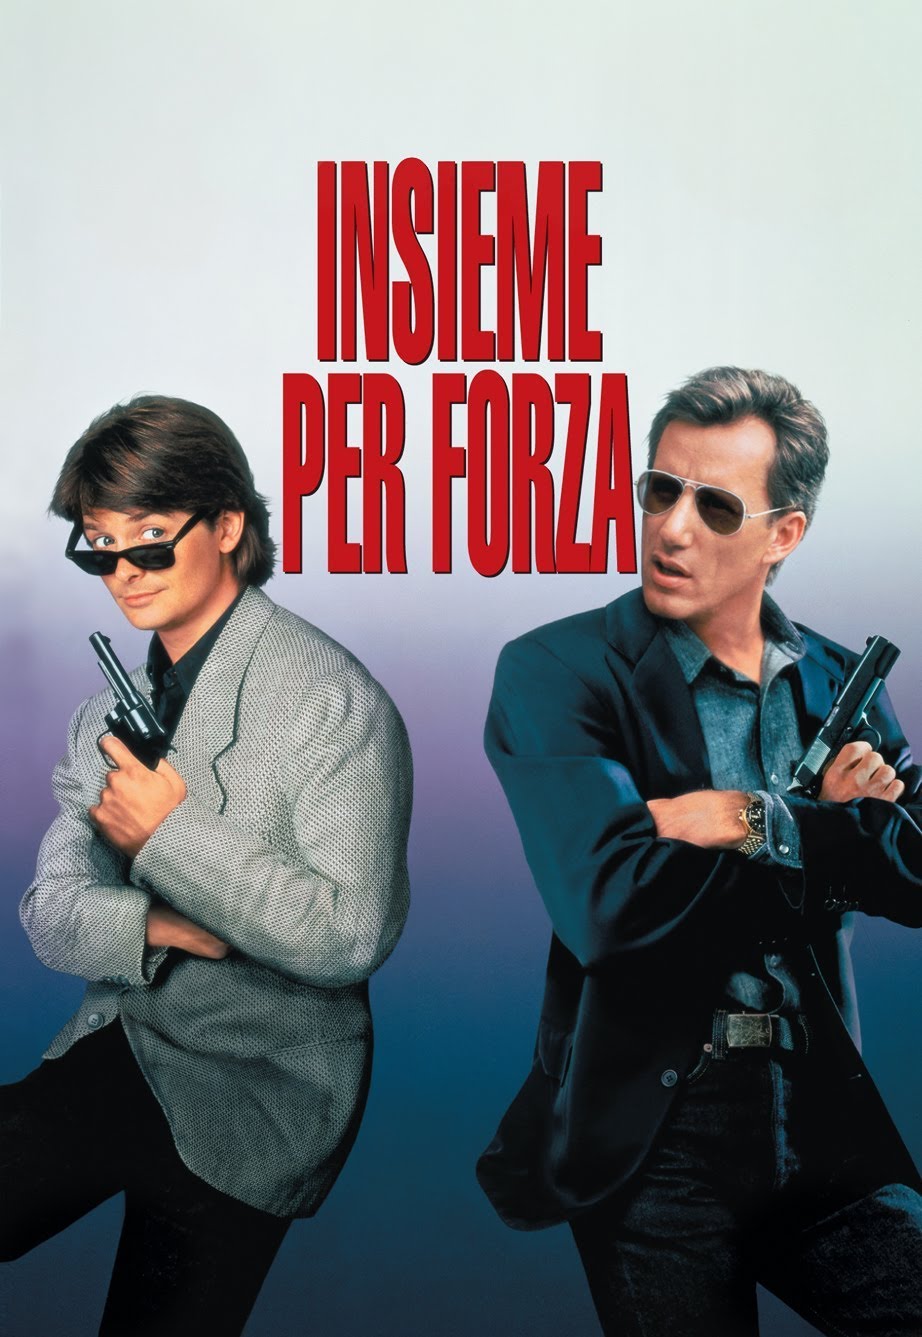 Insieme per forza [HD] (1991)